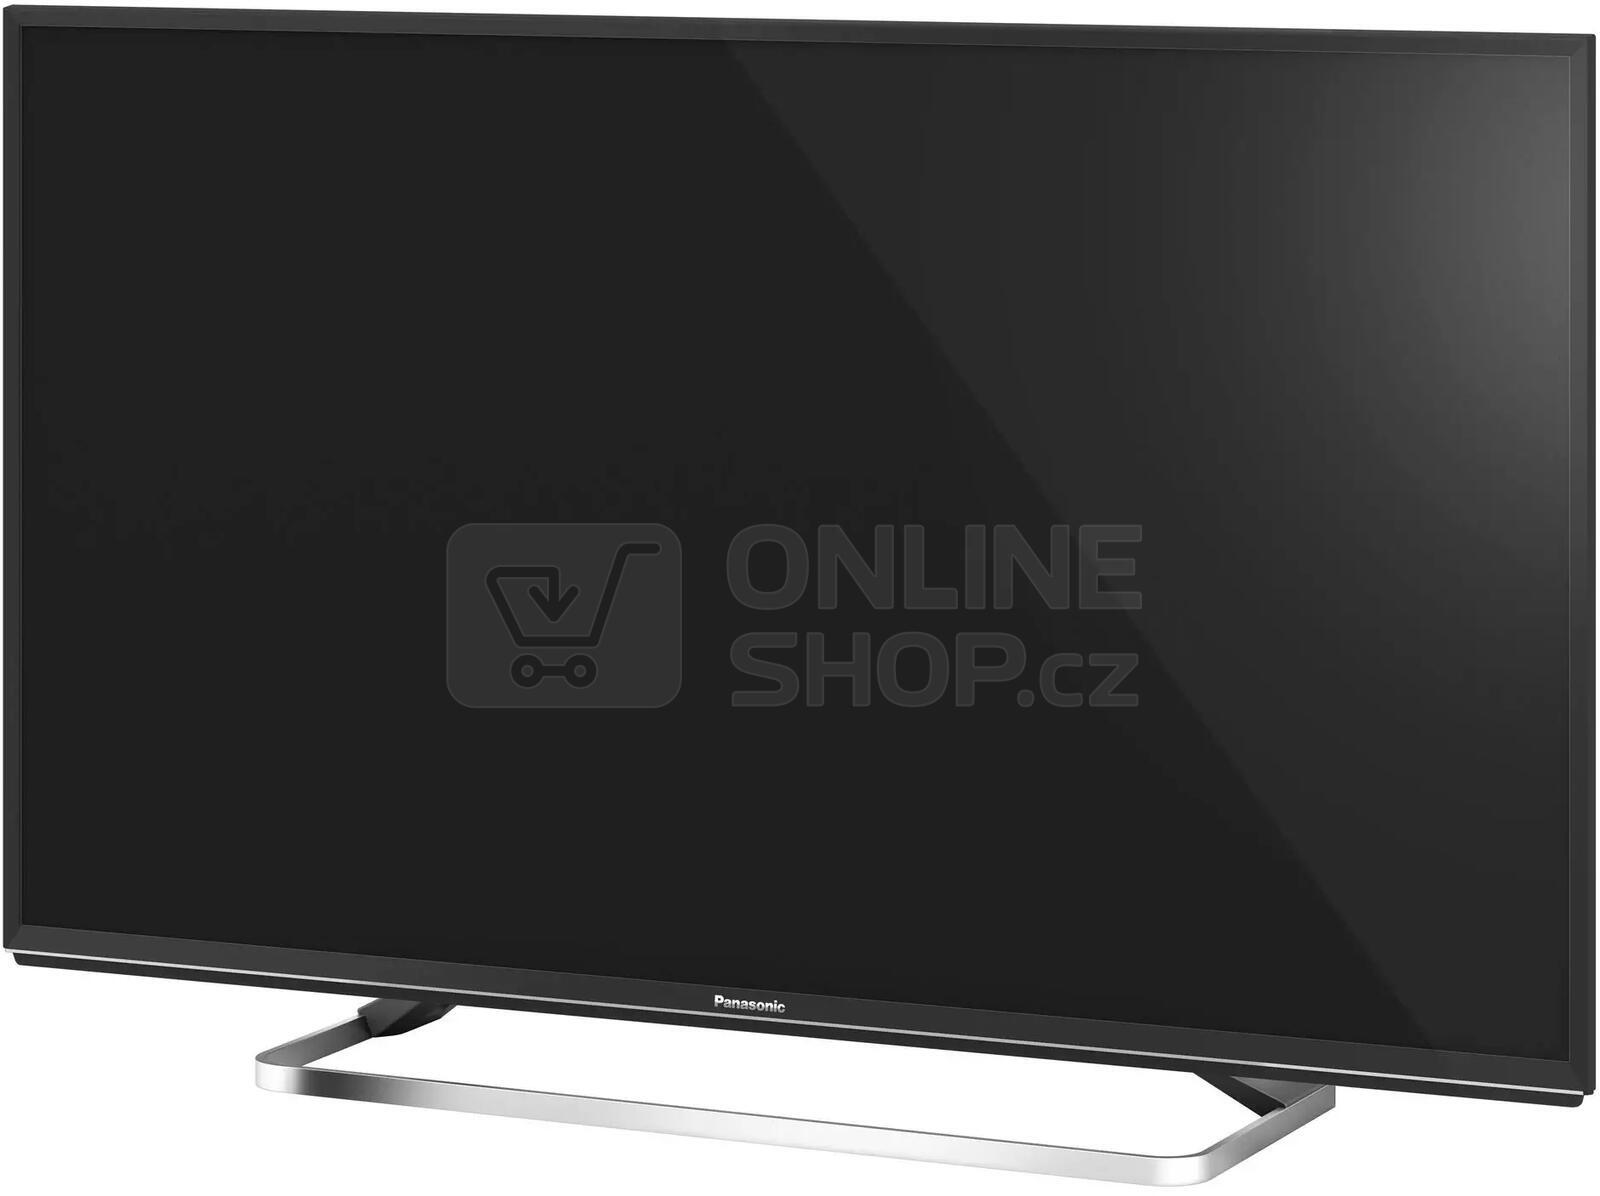 Fhd Led Tv Panasonic Tx 40fs503e Onlineshopcz 1655